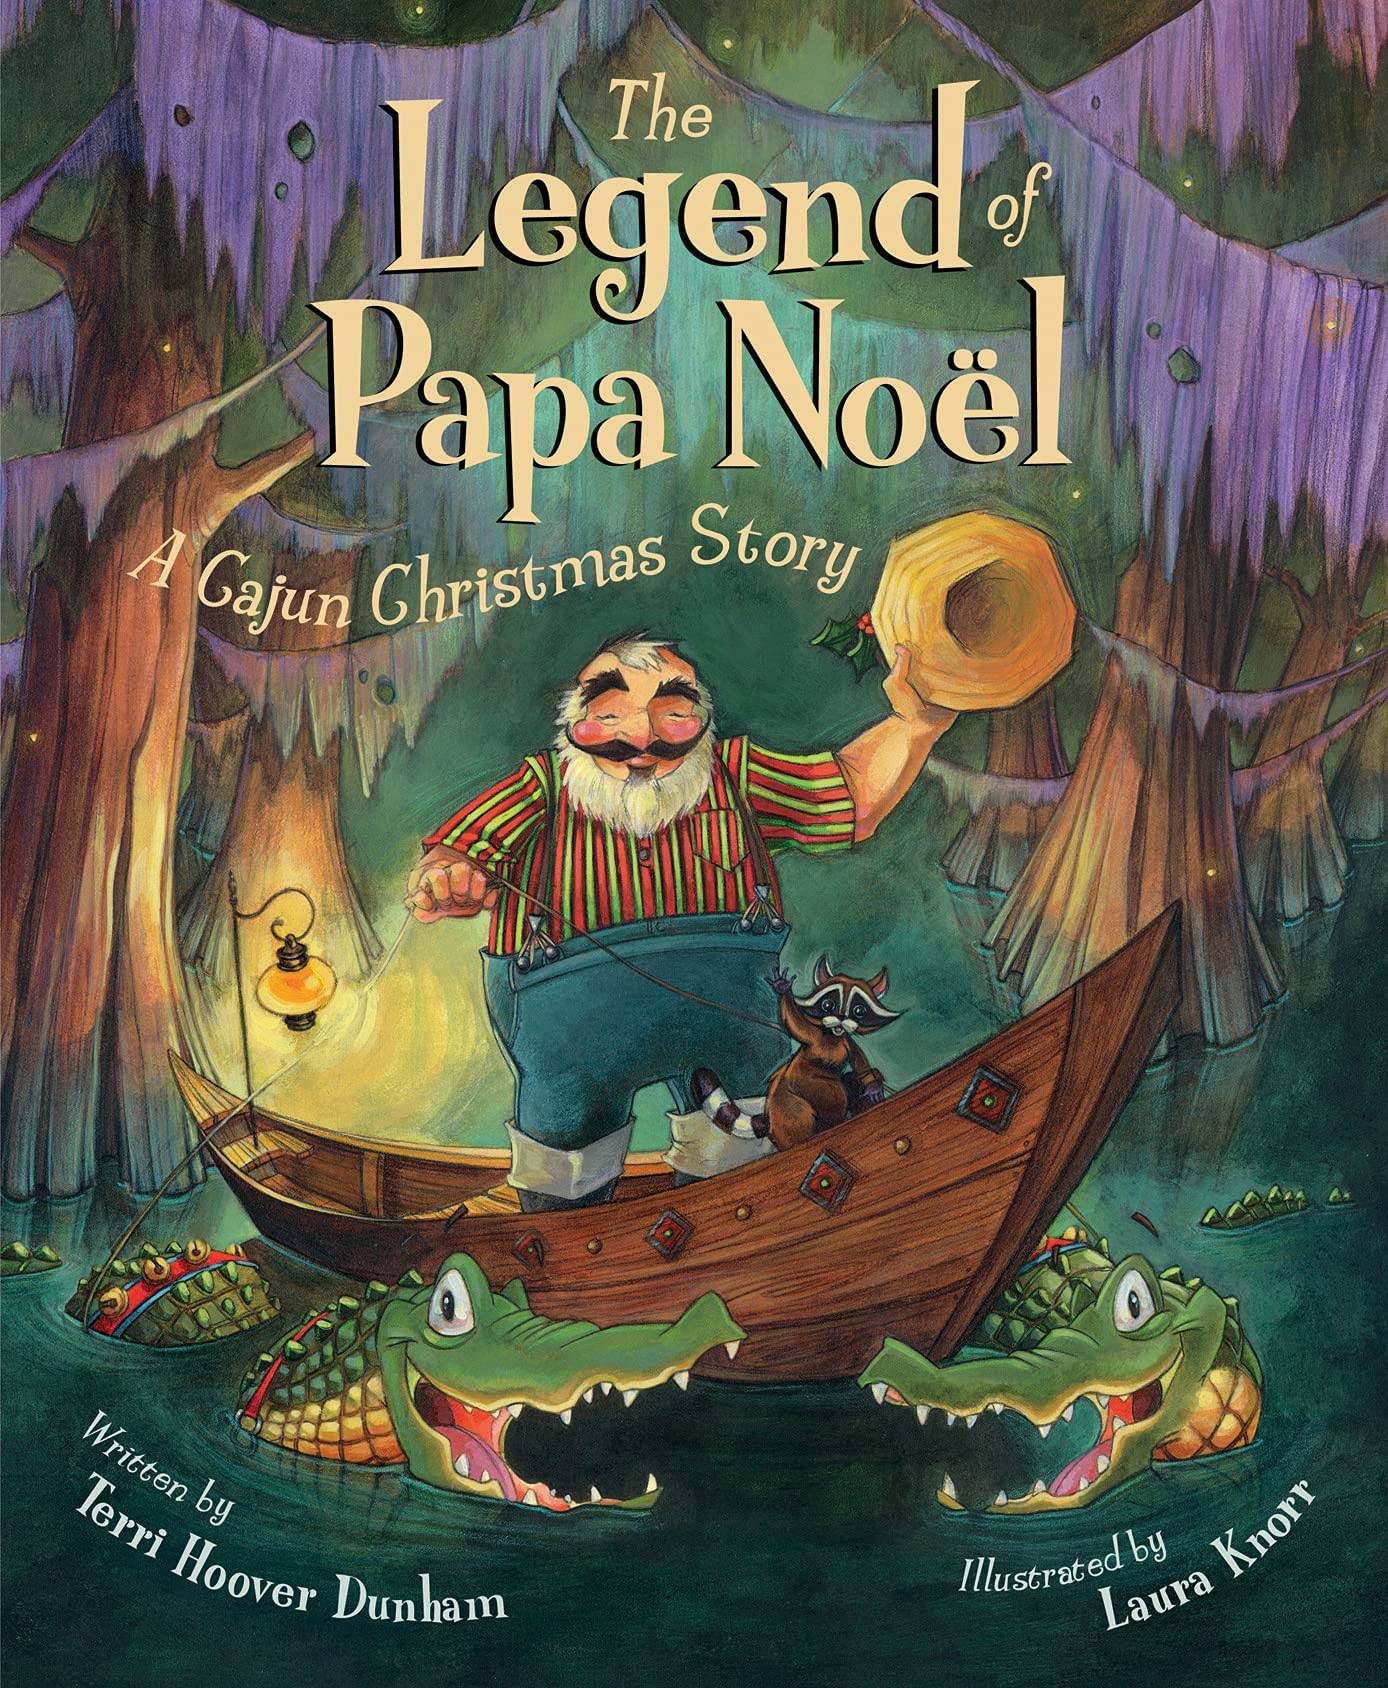 The Legend of Papa Noel: A Cajun Christmas